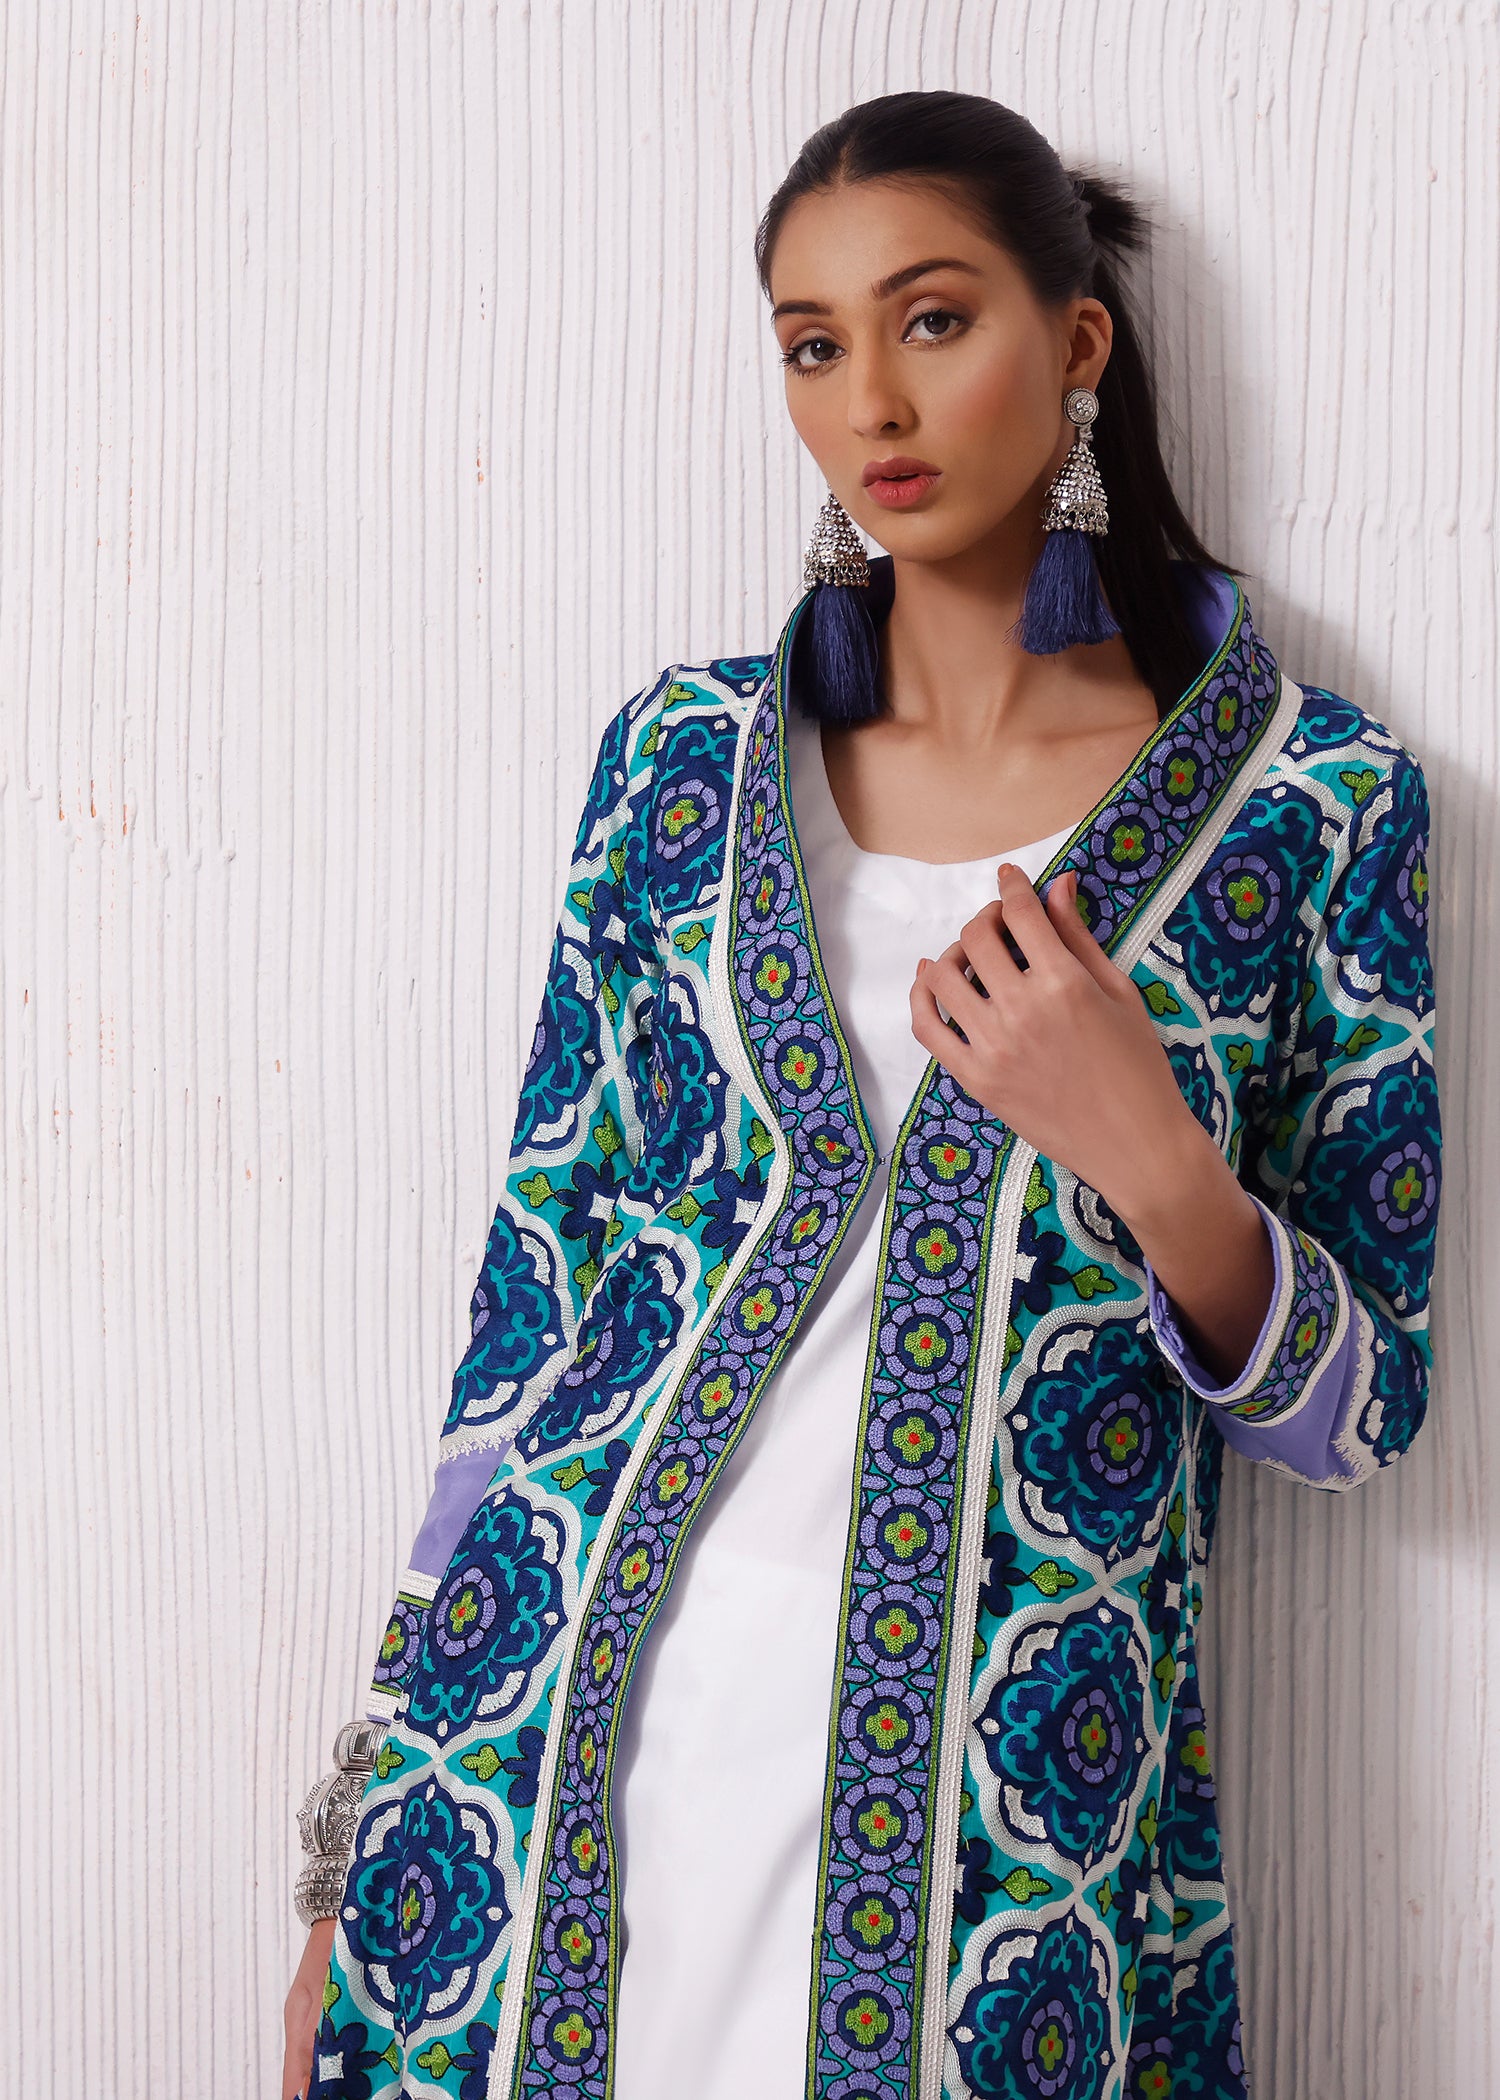 Latest collection By Rizwan Beyg. Evening wear | long coat